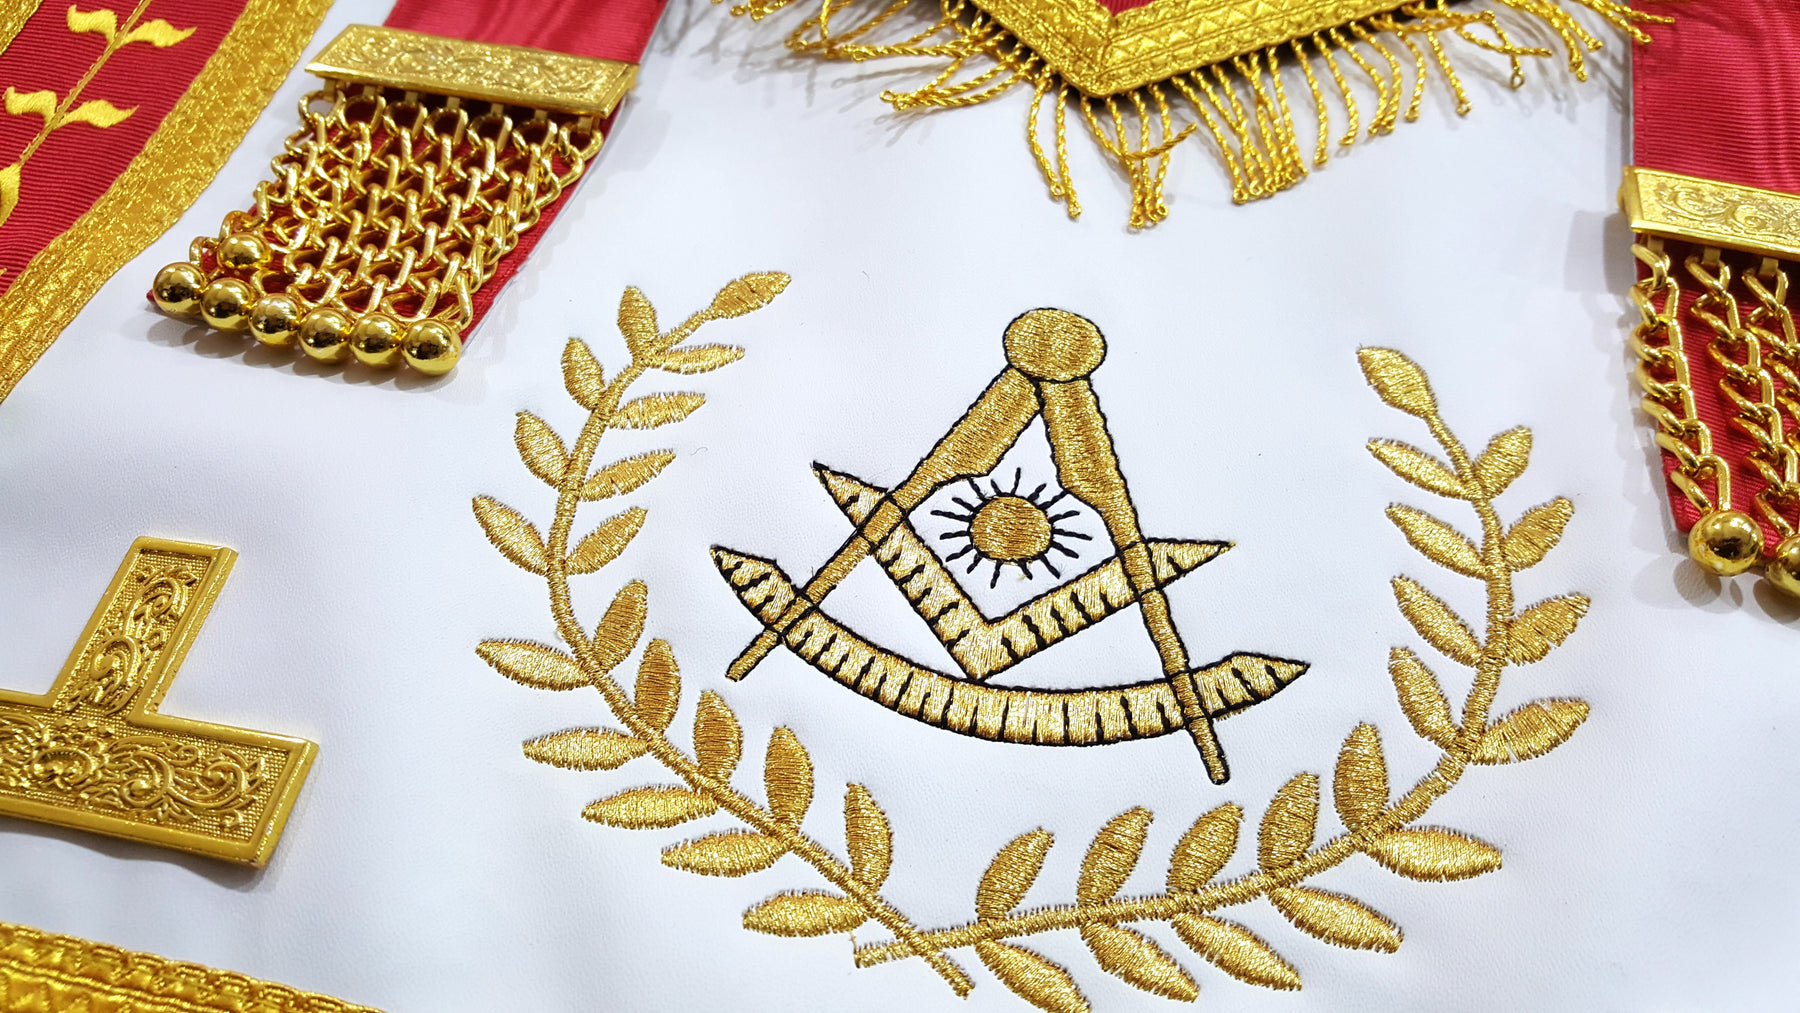 Past Master Blue Lodge Apron - Red Gold Machine Embroidery - Bricks Masons